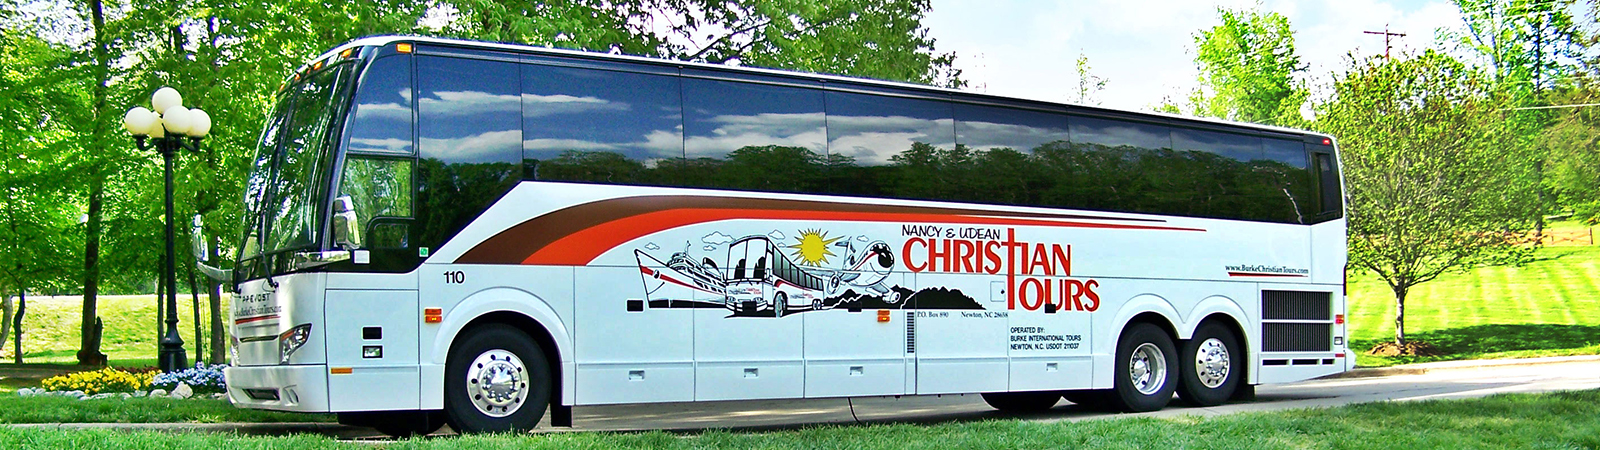 christian burke tours